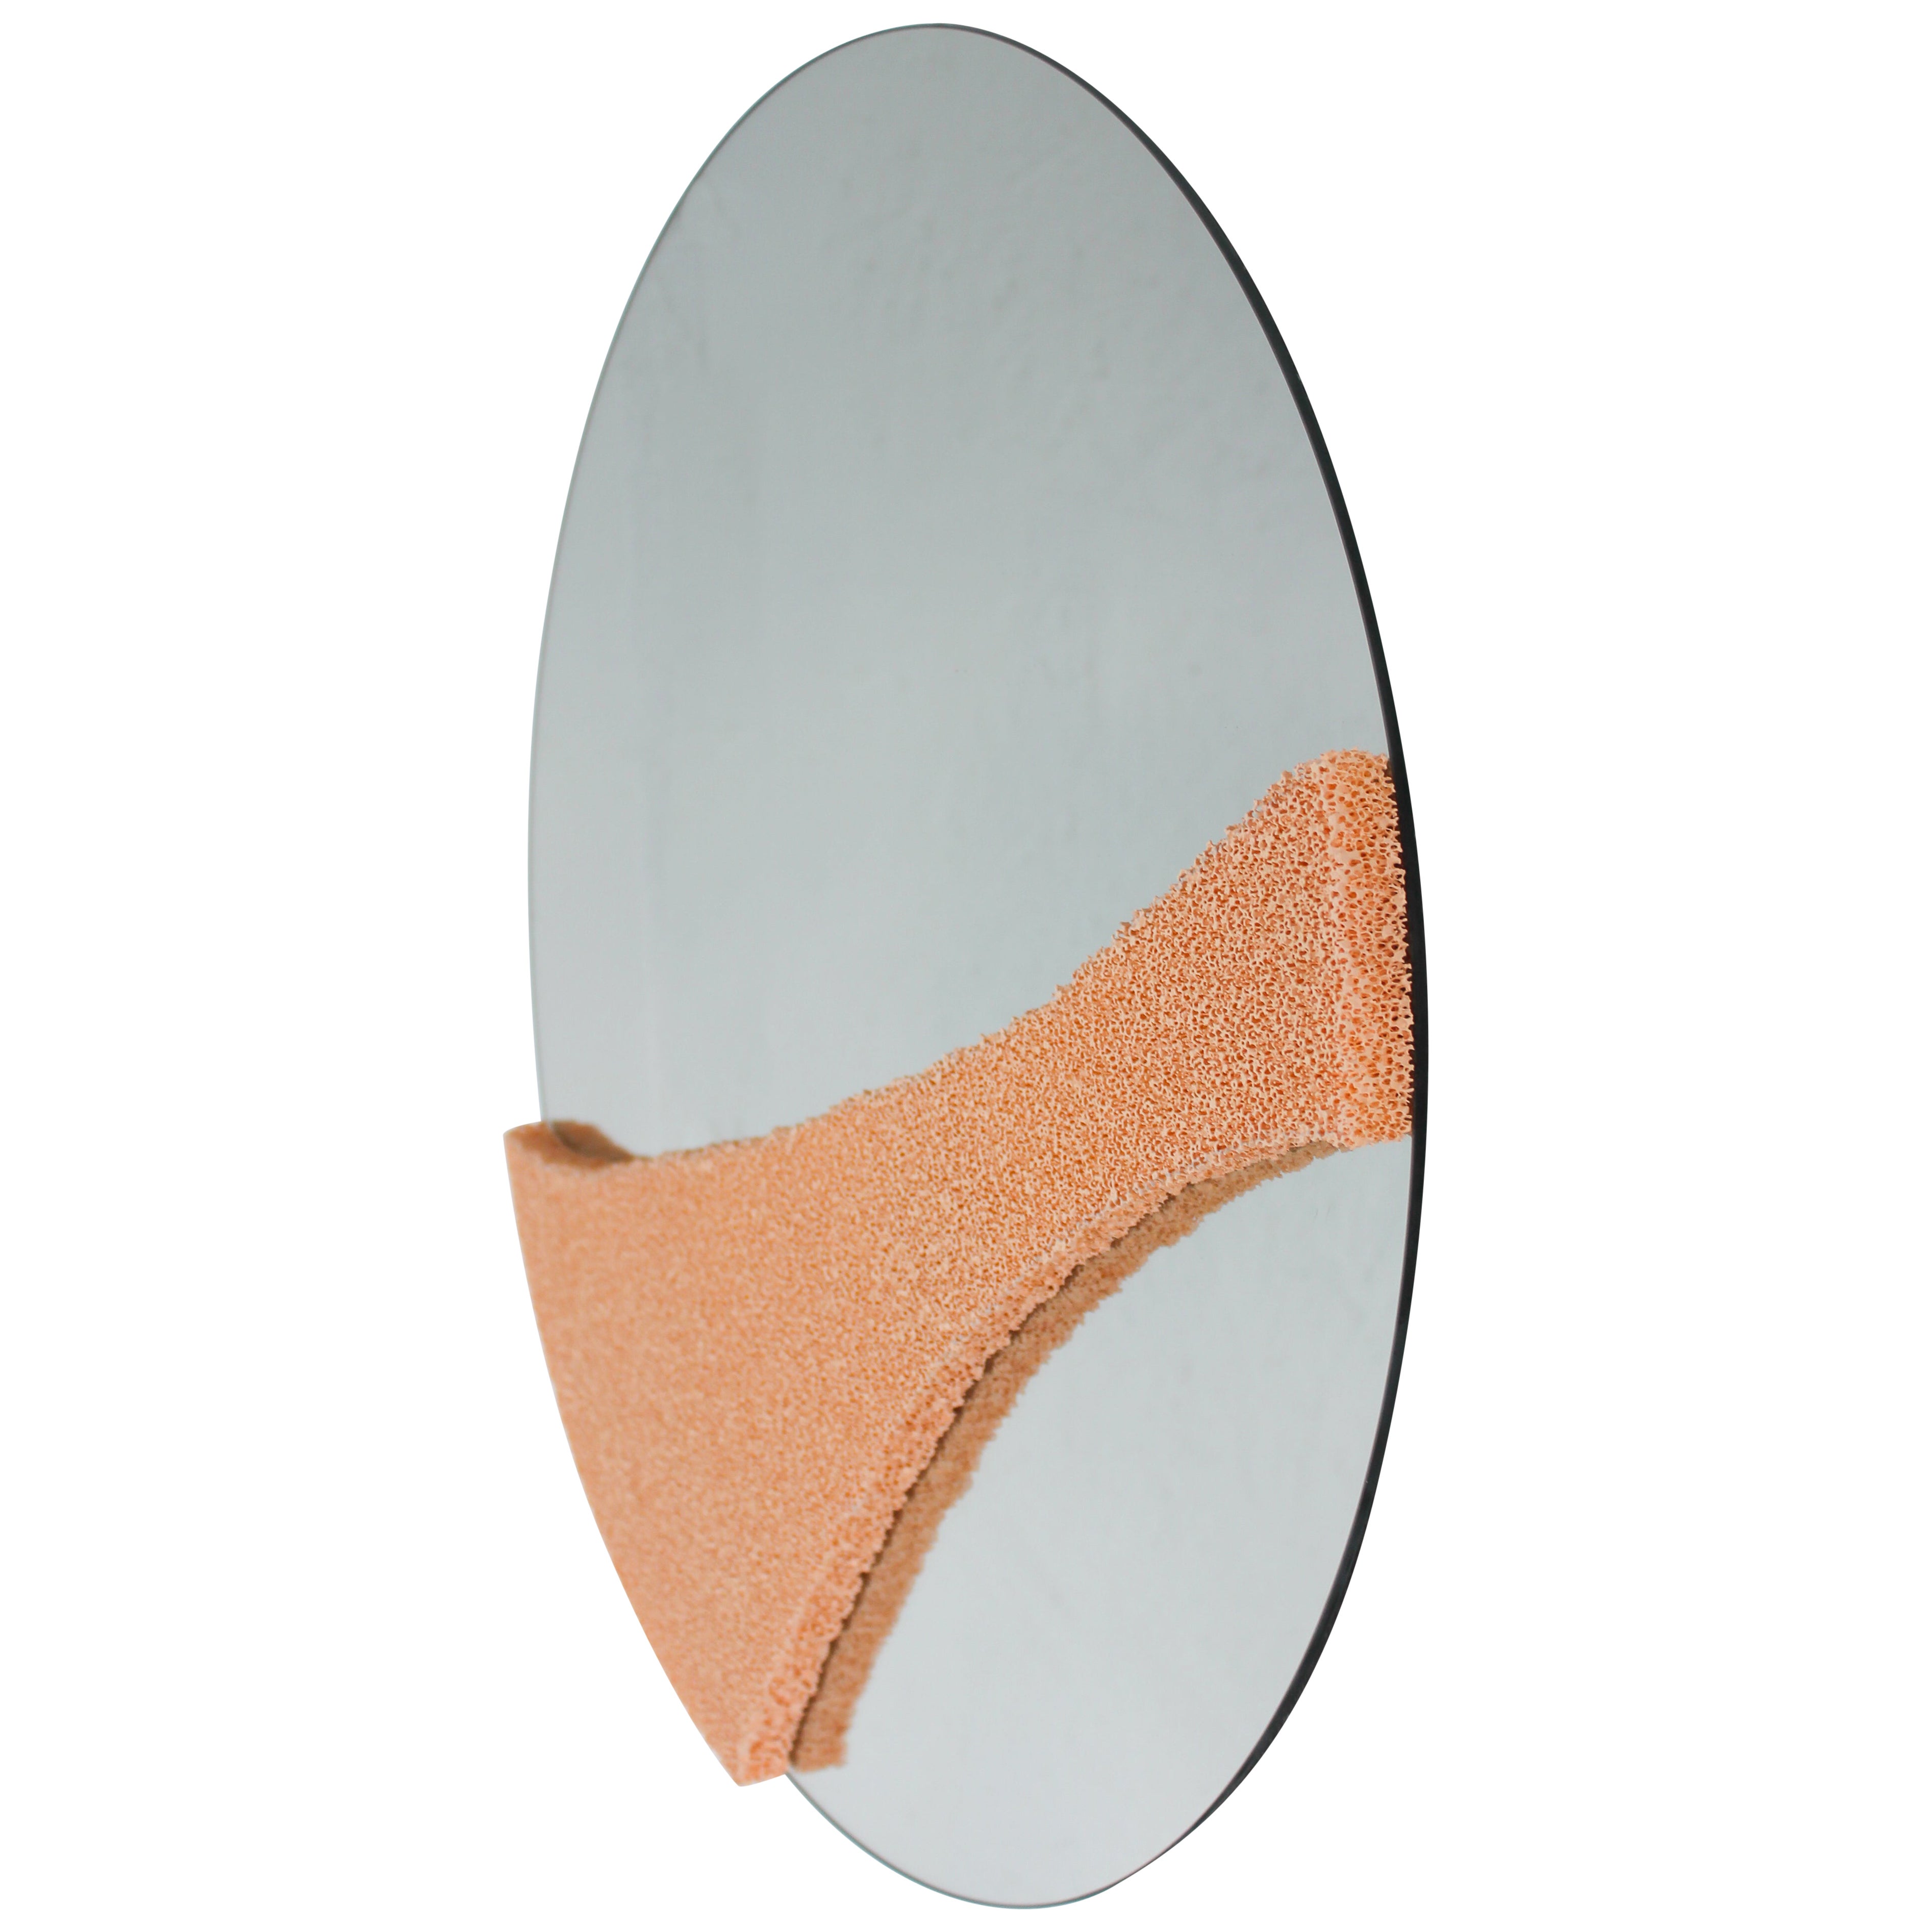 BC - Big Circle, Ceramic Foam Hanging Mirror by Jordan Keaney For Sale